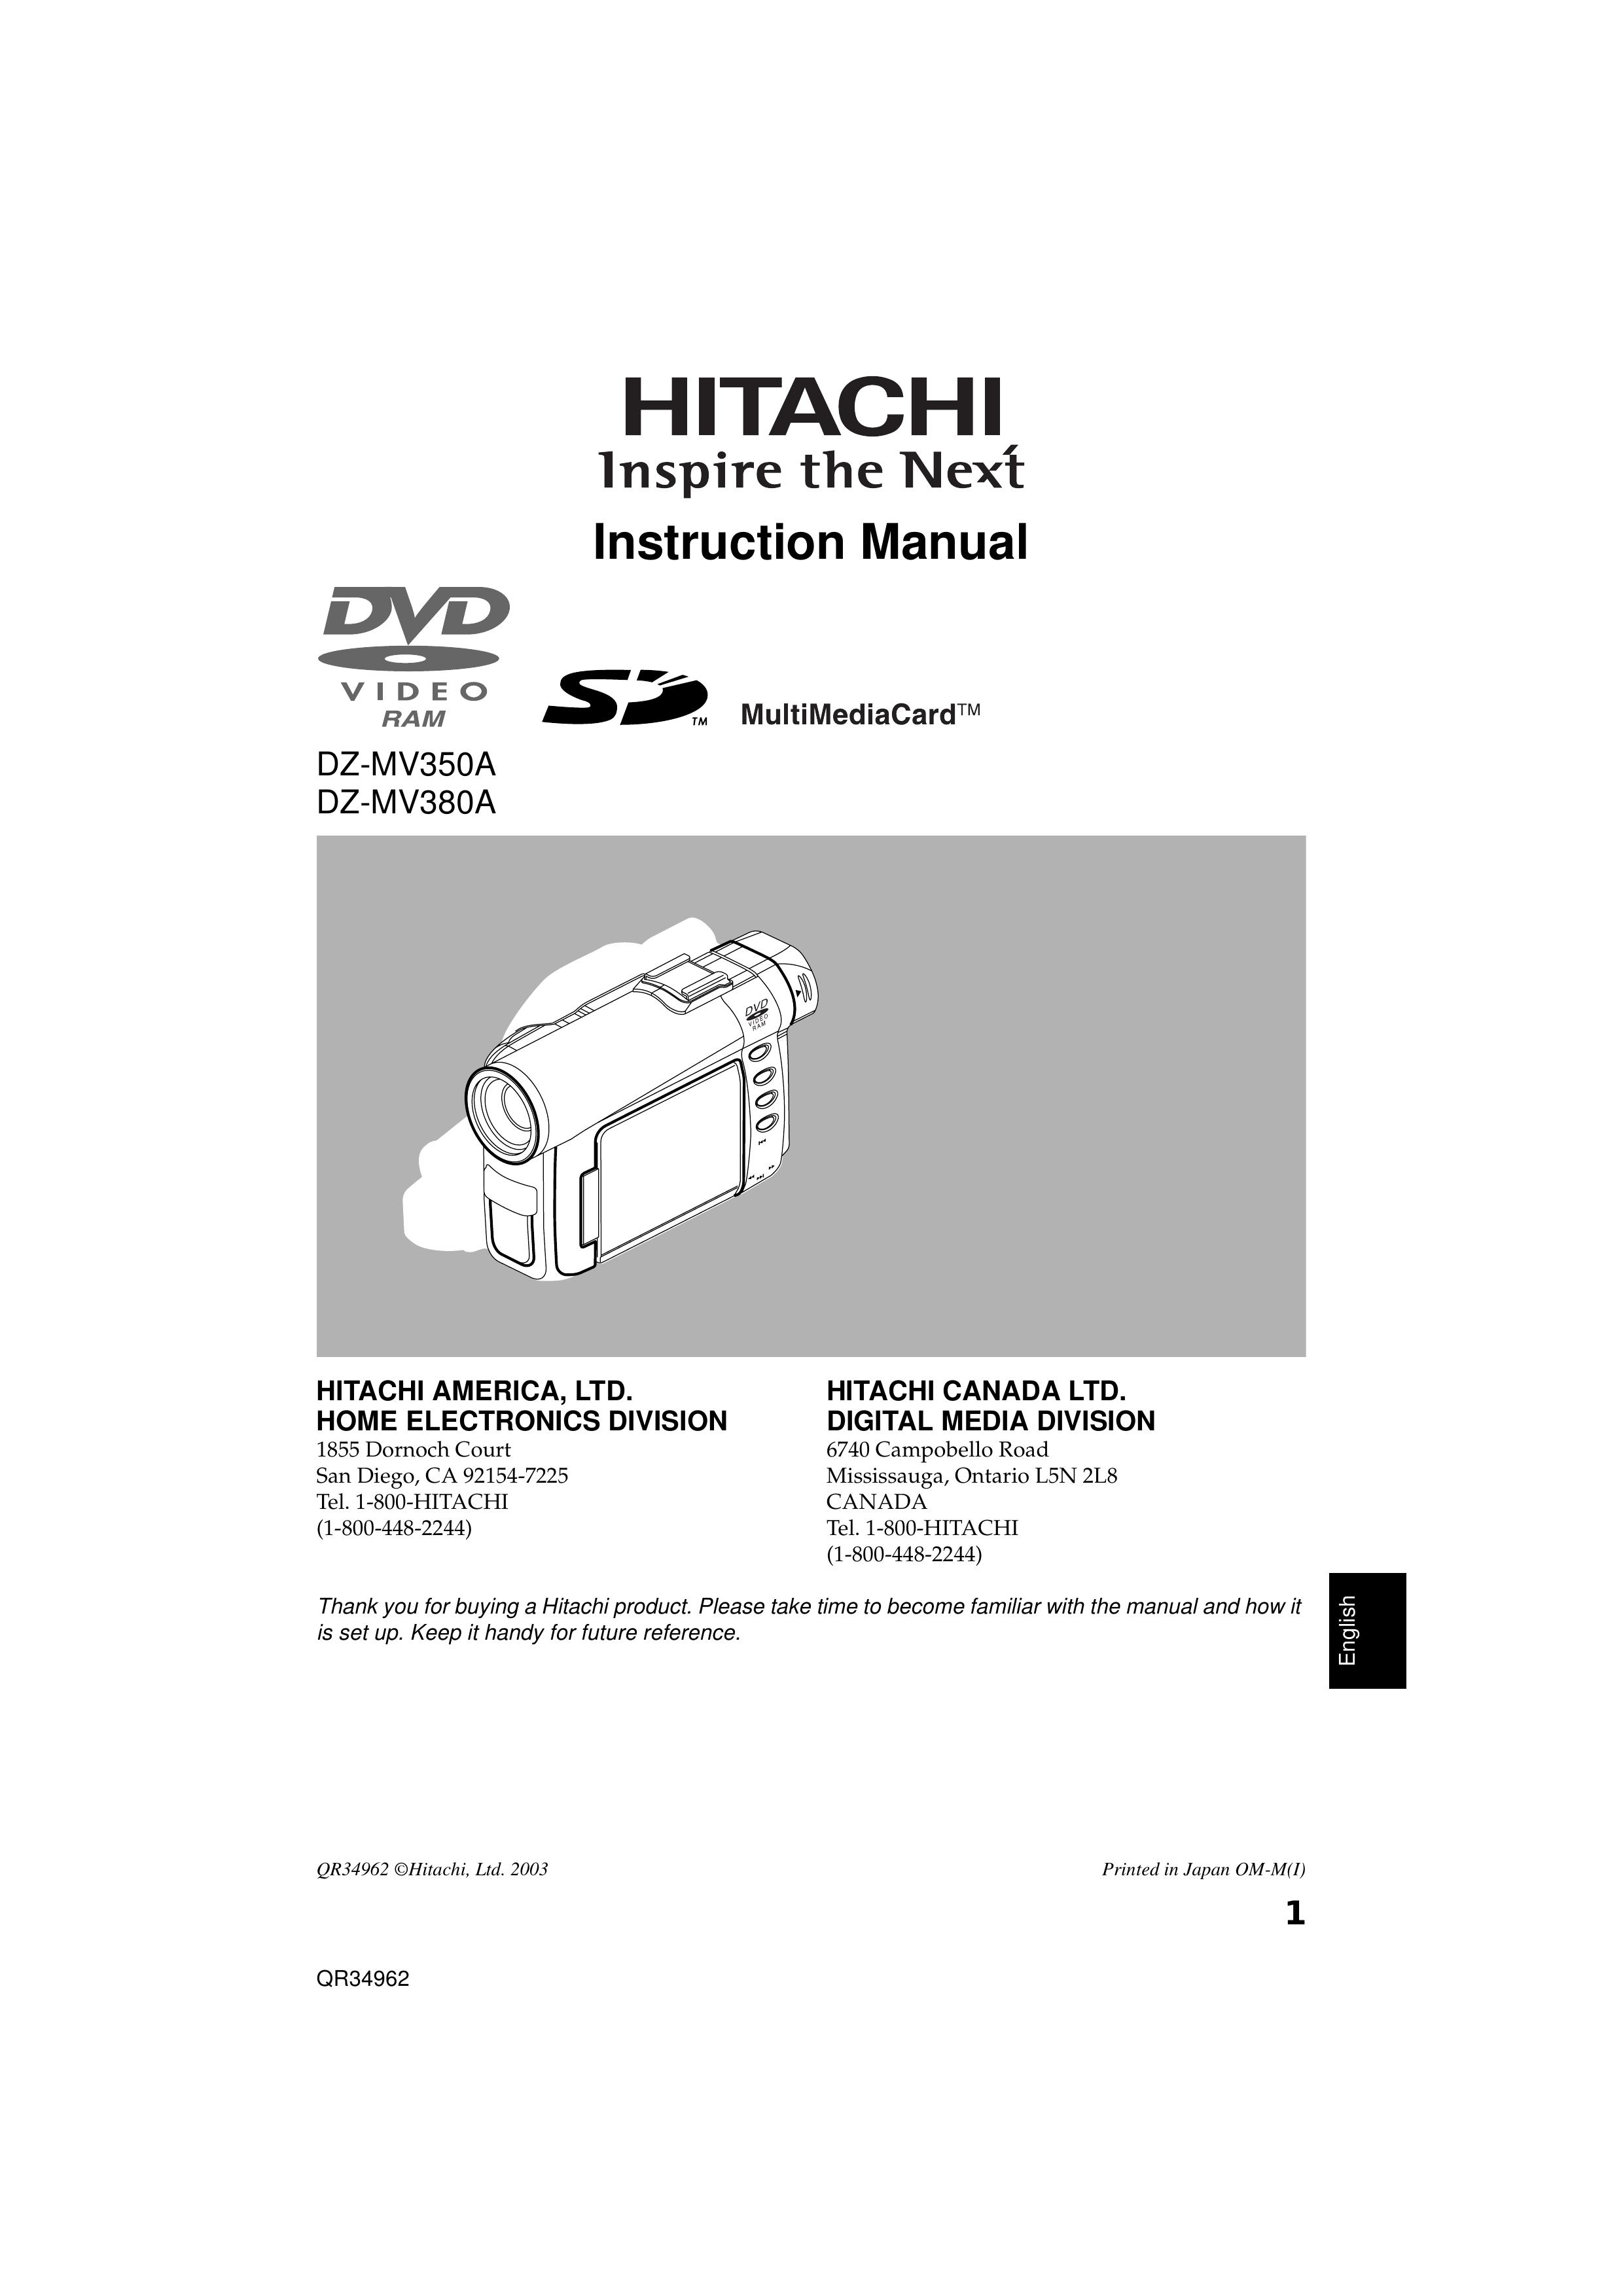 Hitachi DZMV380A Camcorder User Manual